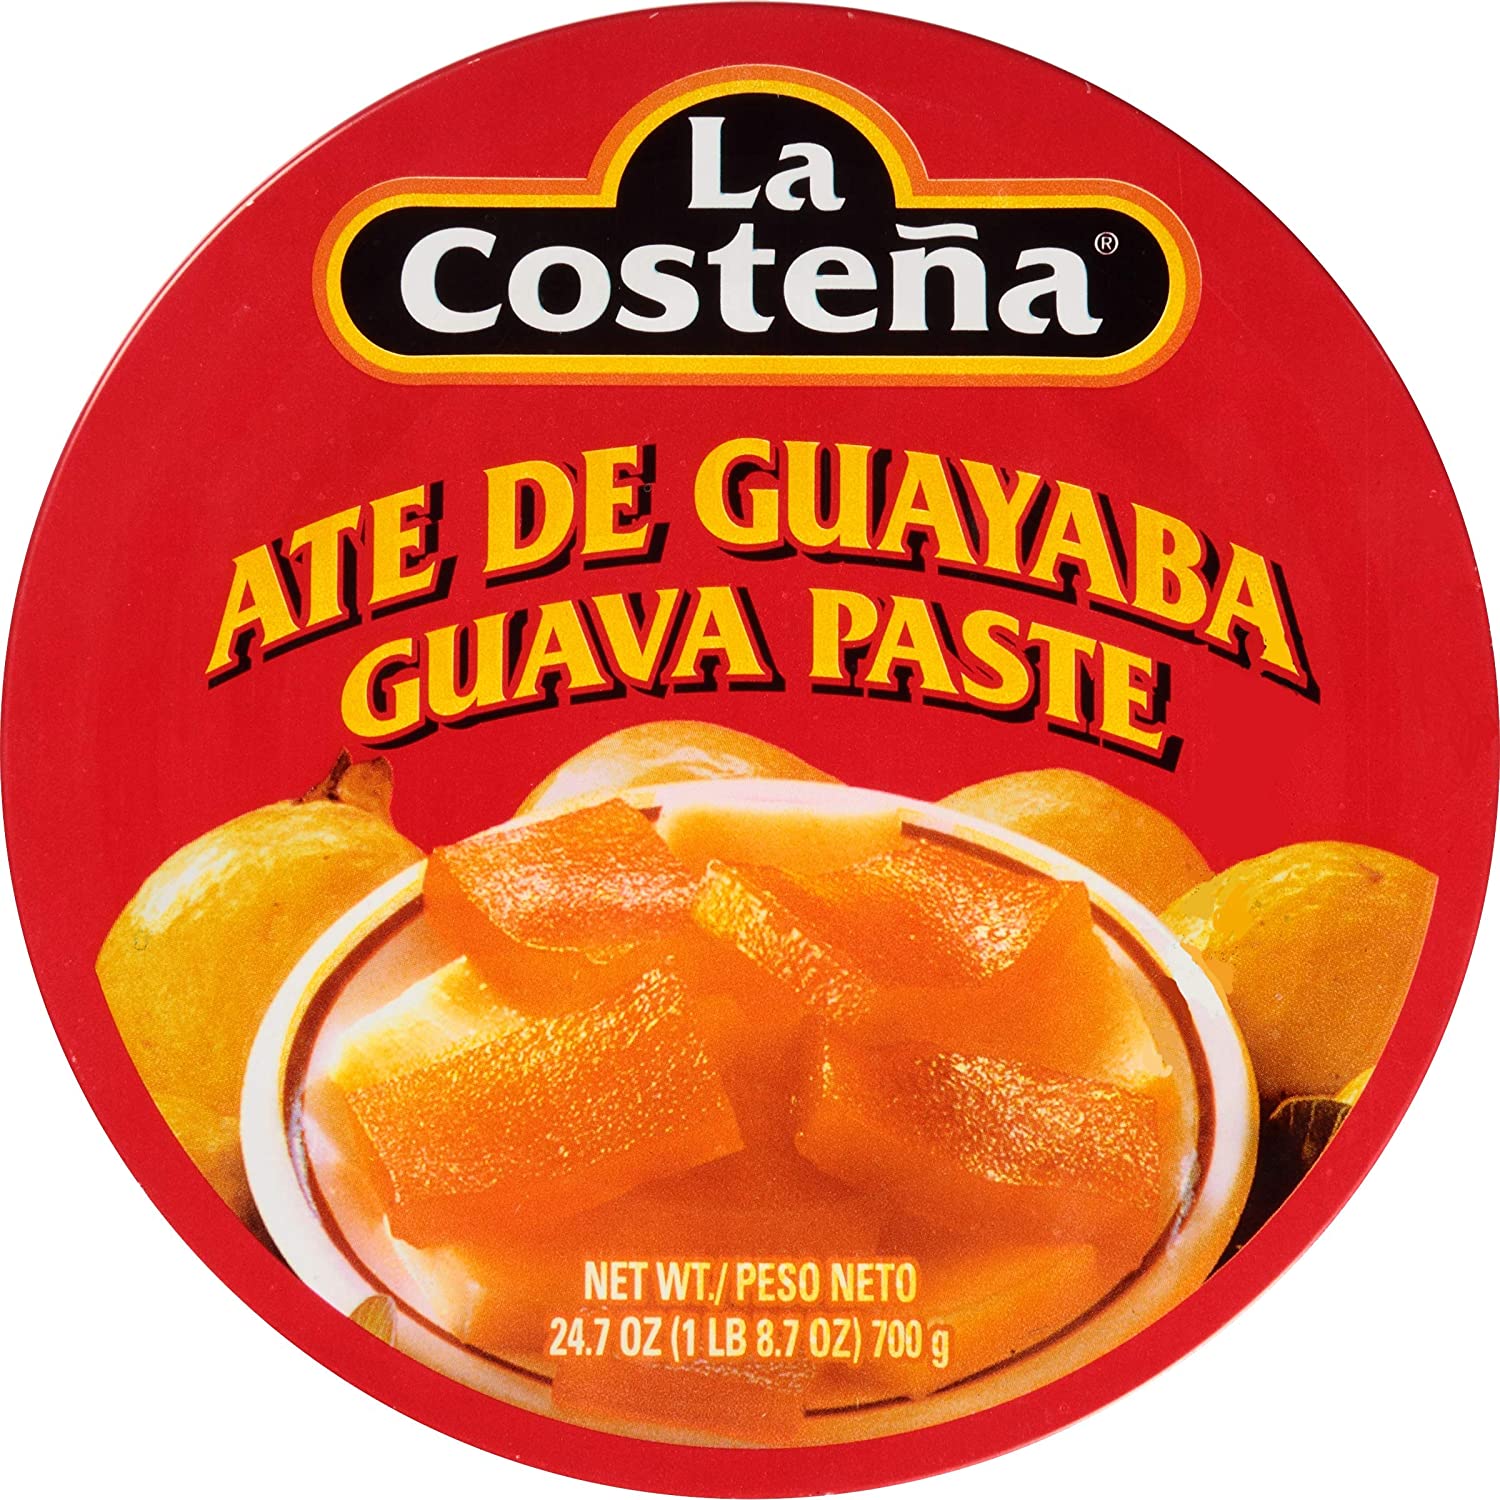 La Costena ate de Guayaba (guava paste) 700gm